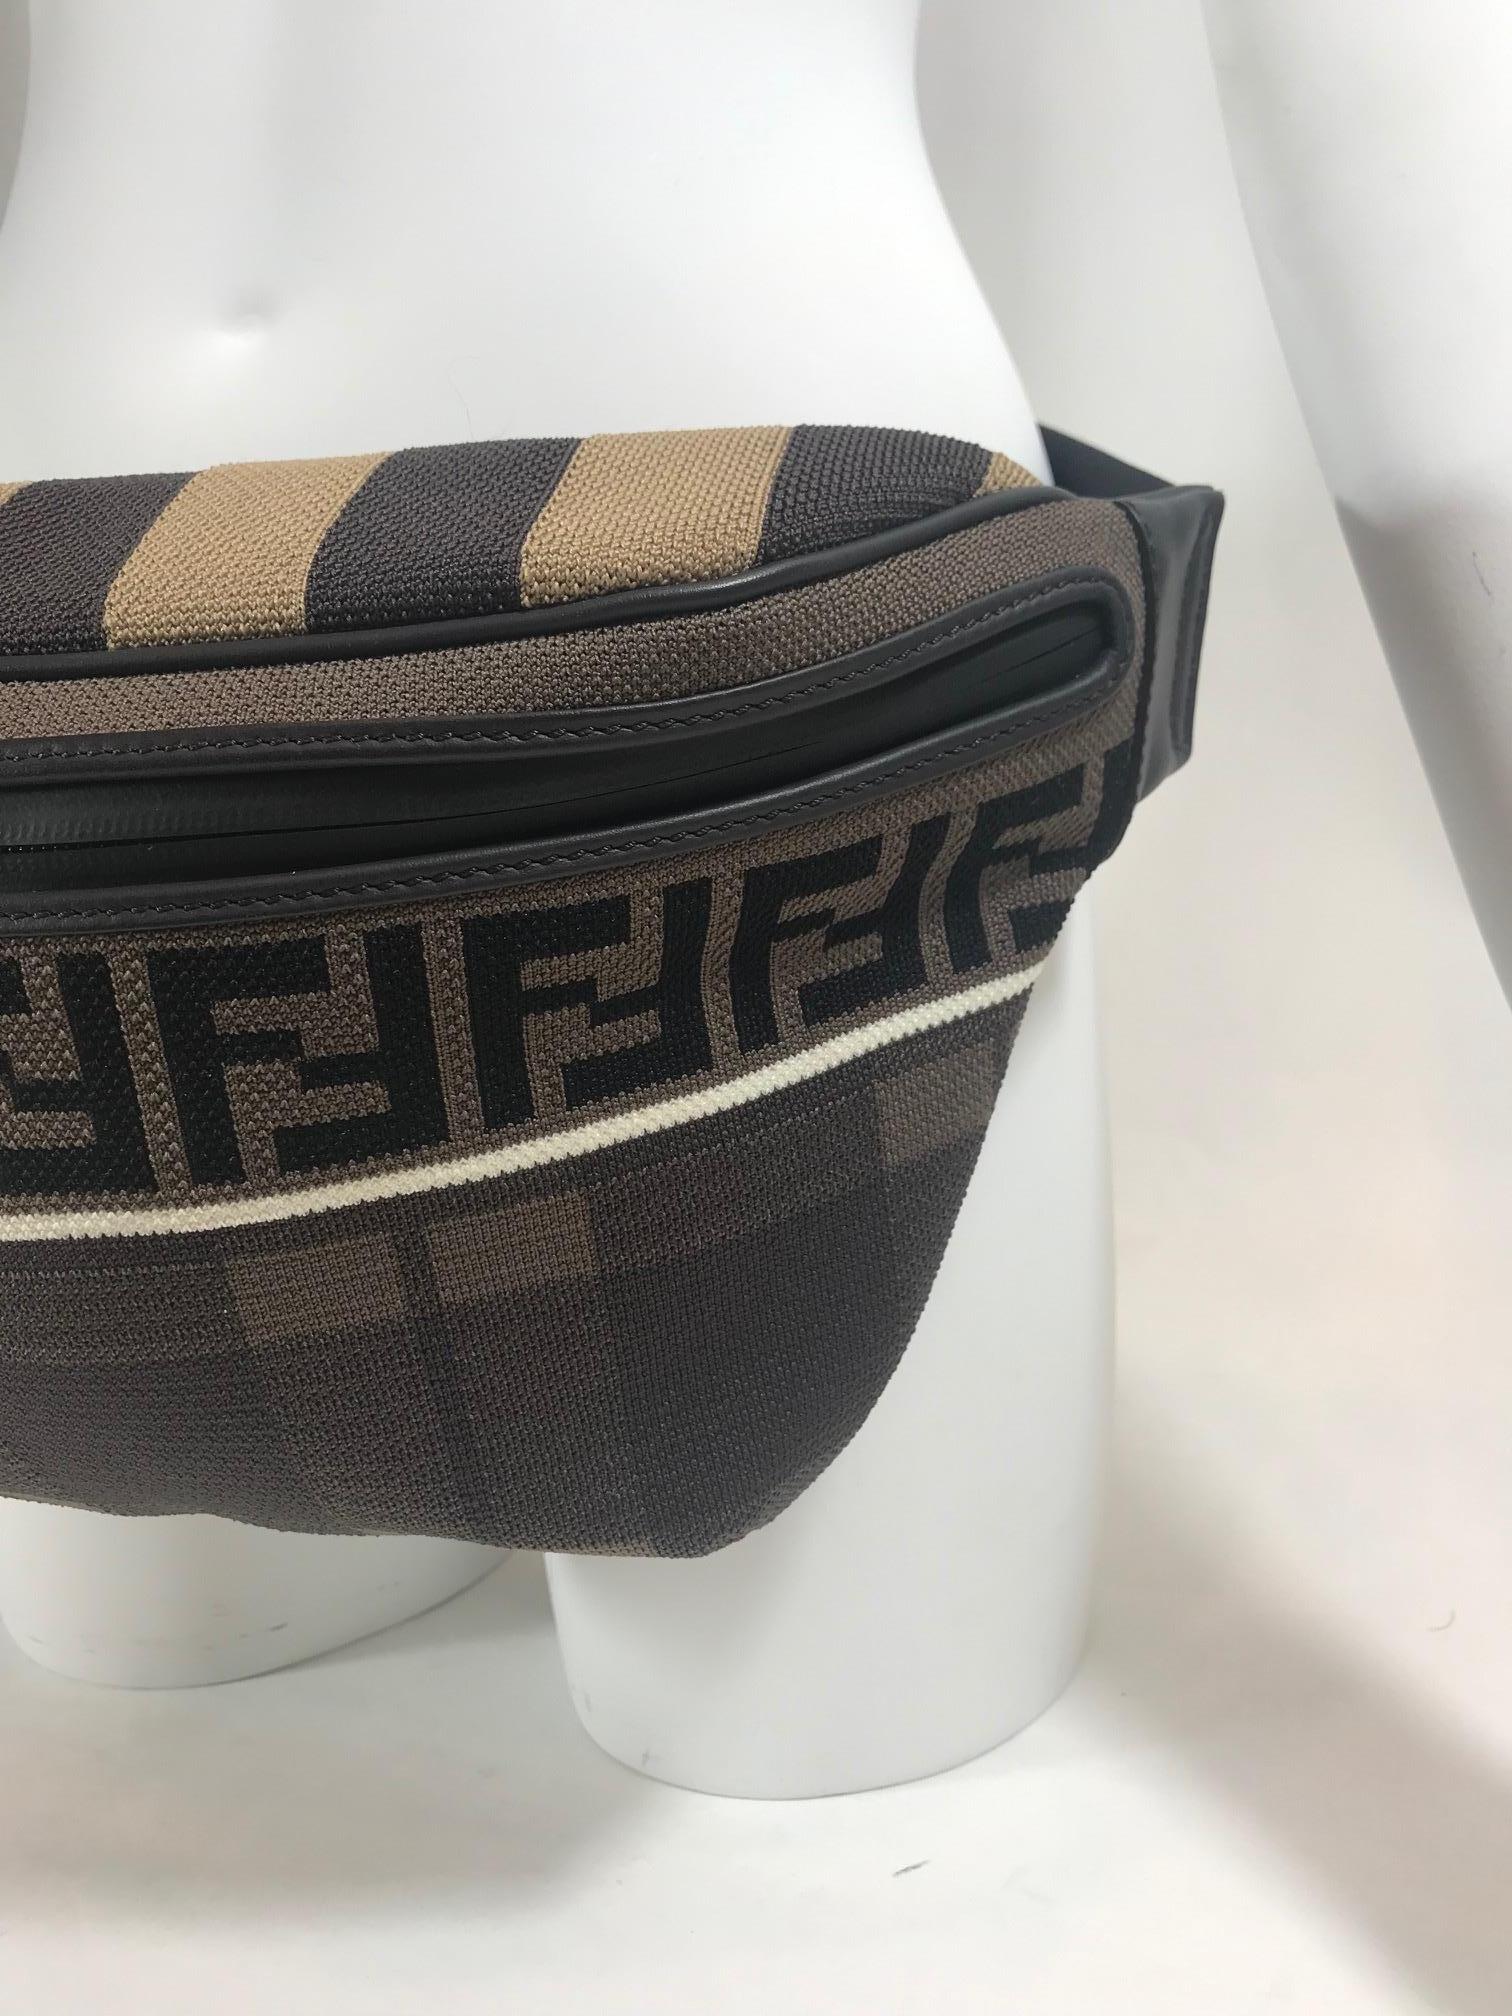 Fendi Brown Tartan 'Forever Fendi' Waist Bag In New Condition For Sale In Roslyn, NY